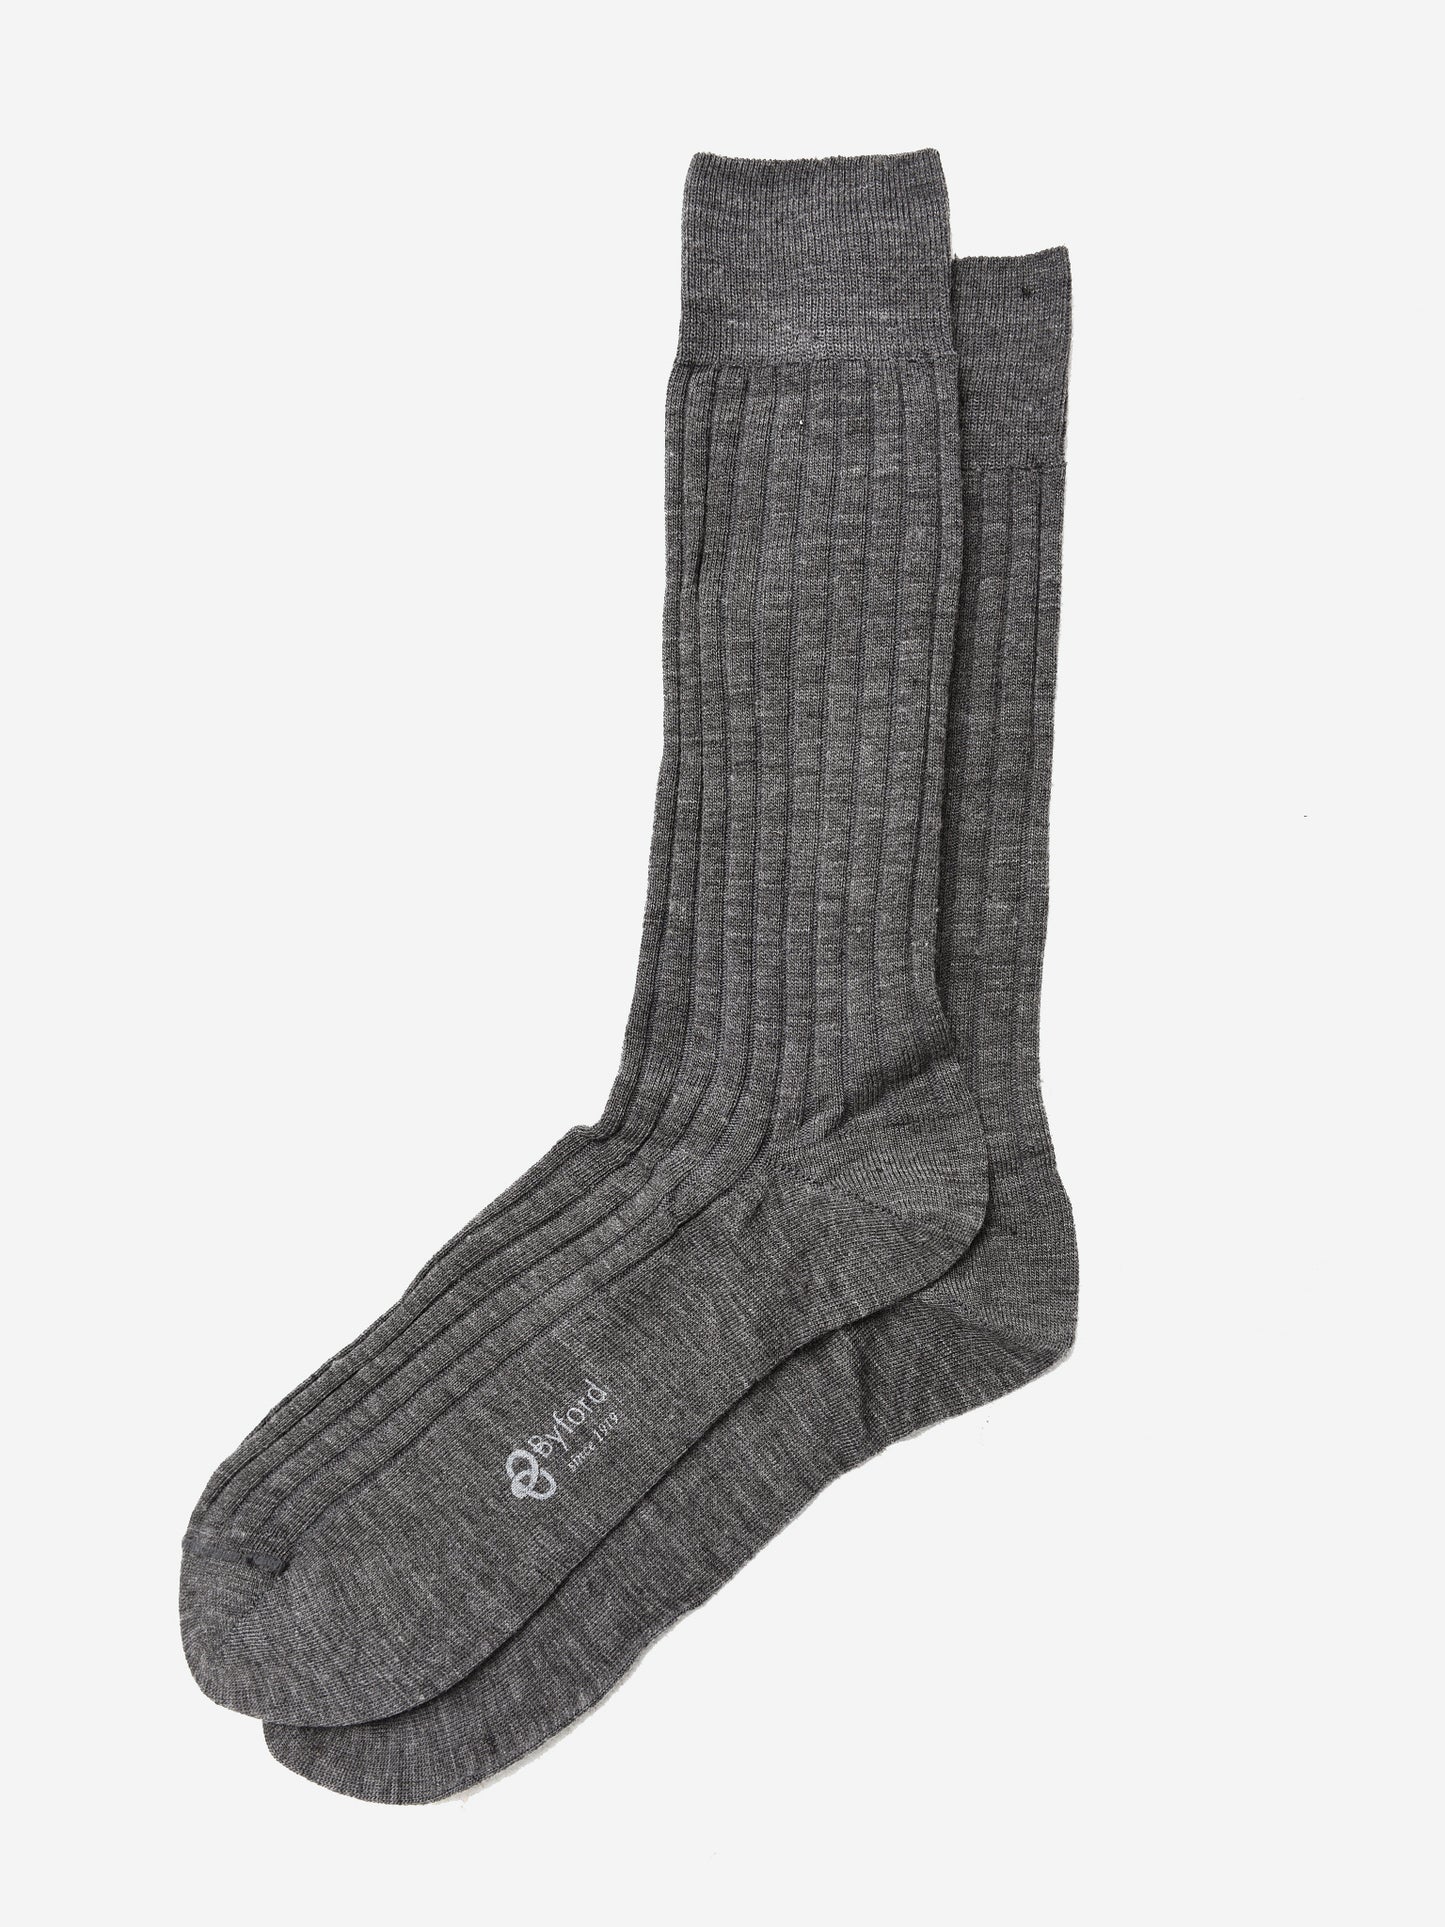 Byford Men's Superwash Solid Merino Wool Dress Sock